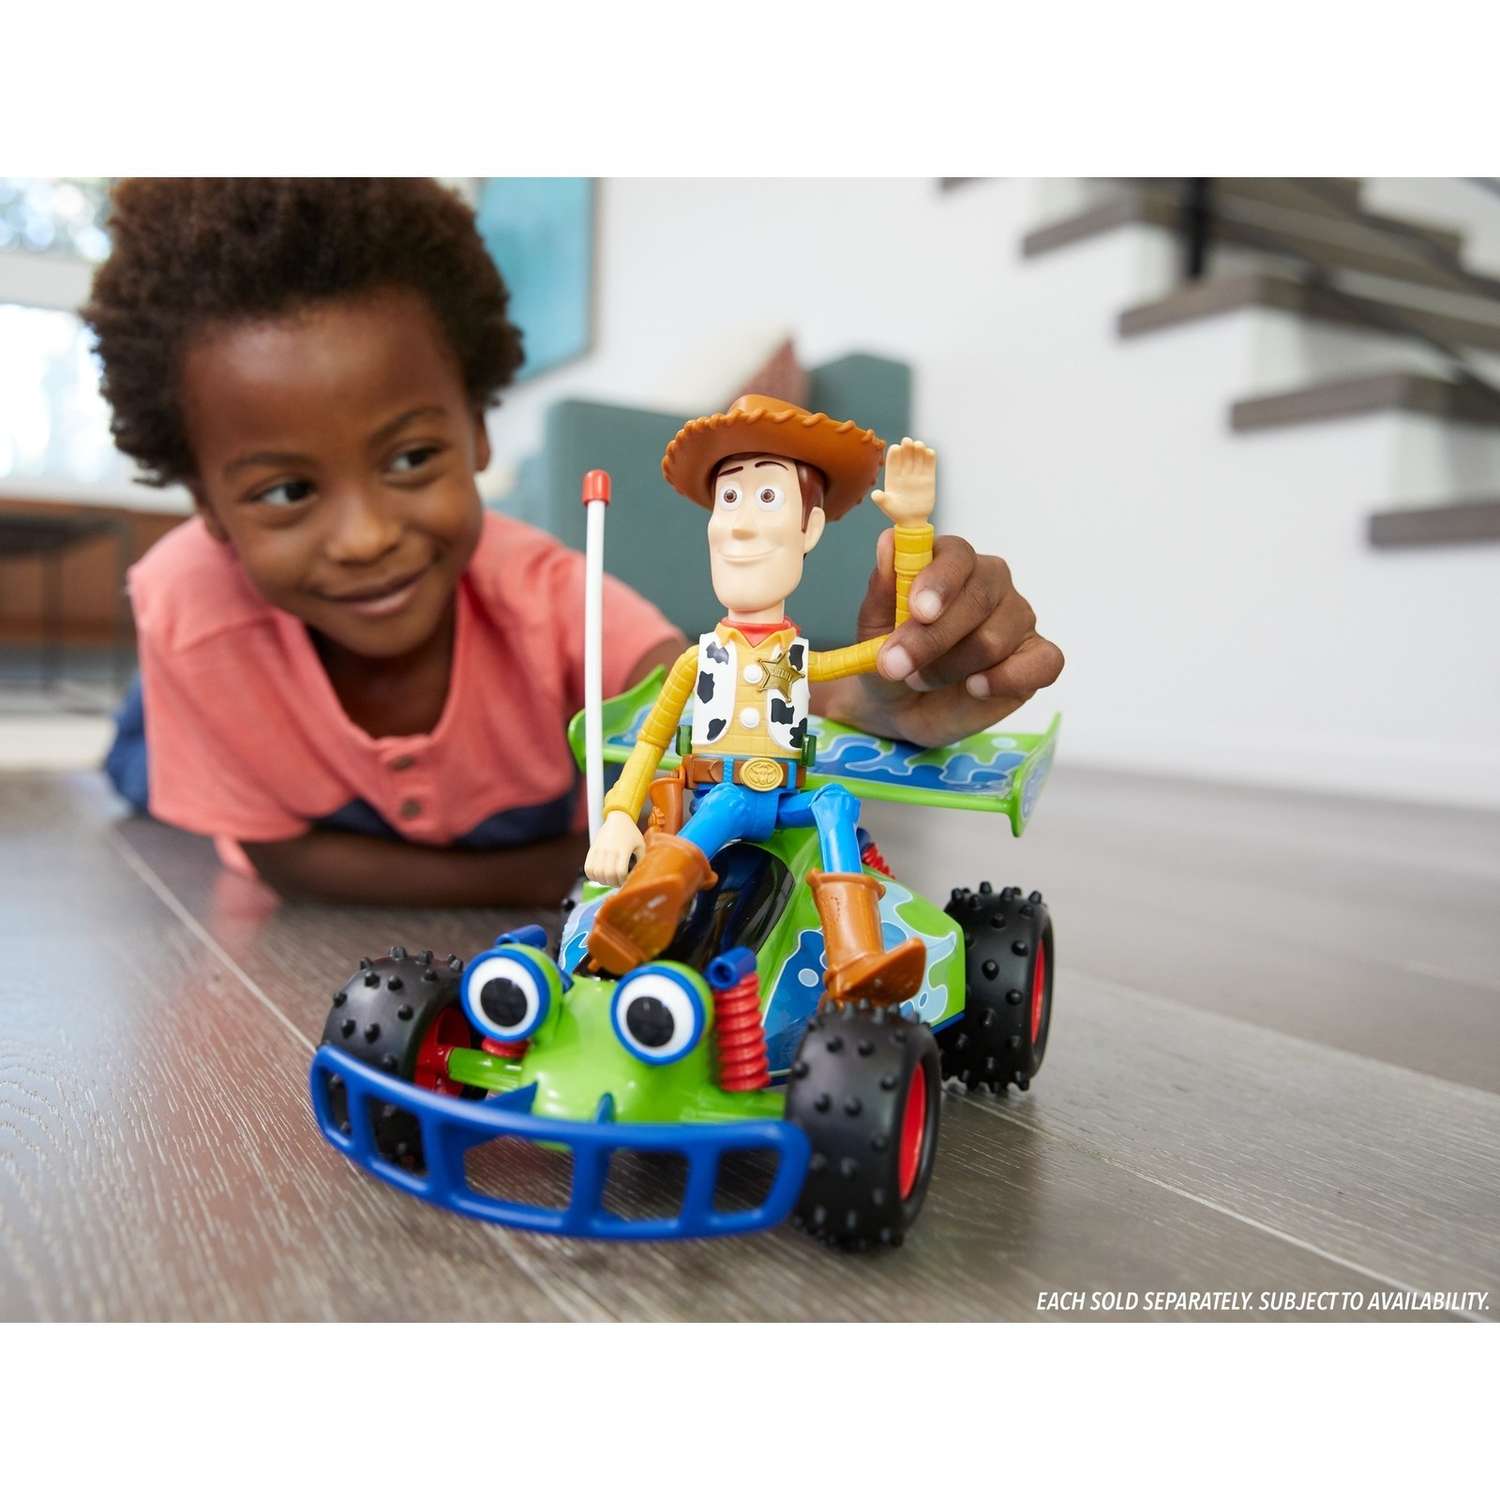 Фигурка Toy Story История игрушек 4 Вуди GDP68 - фото 13